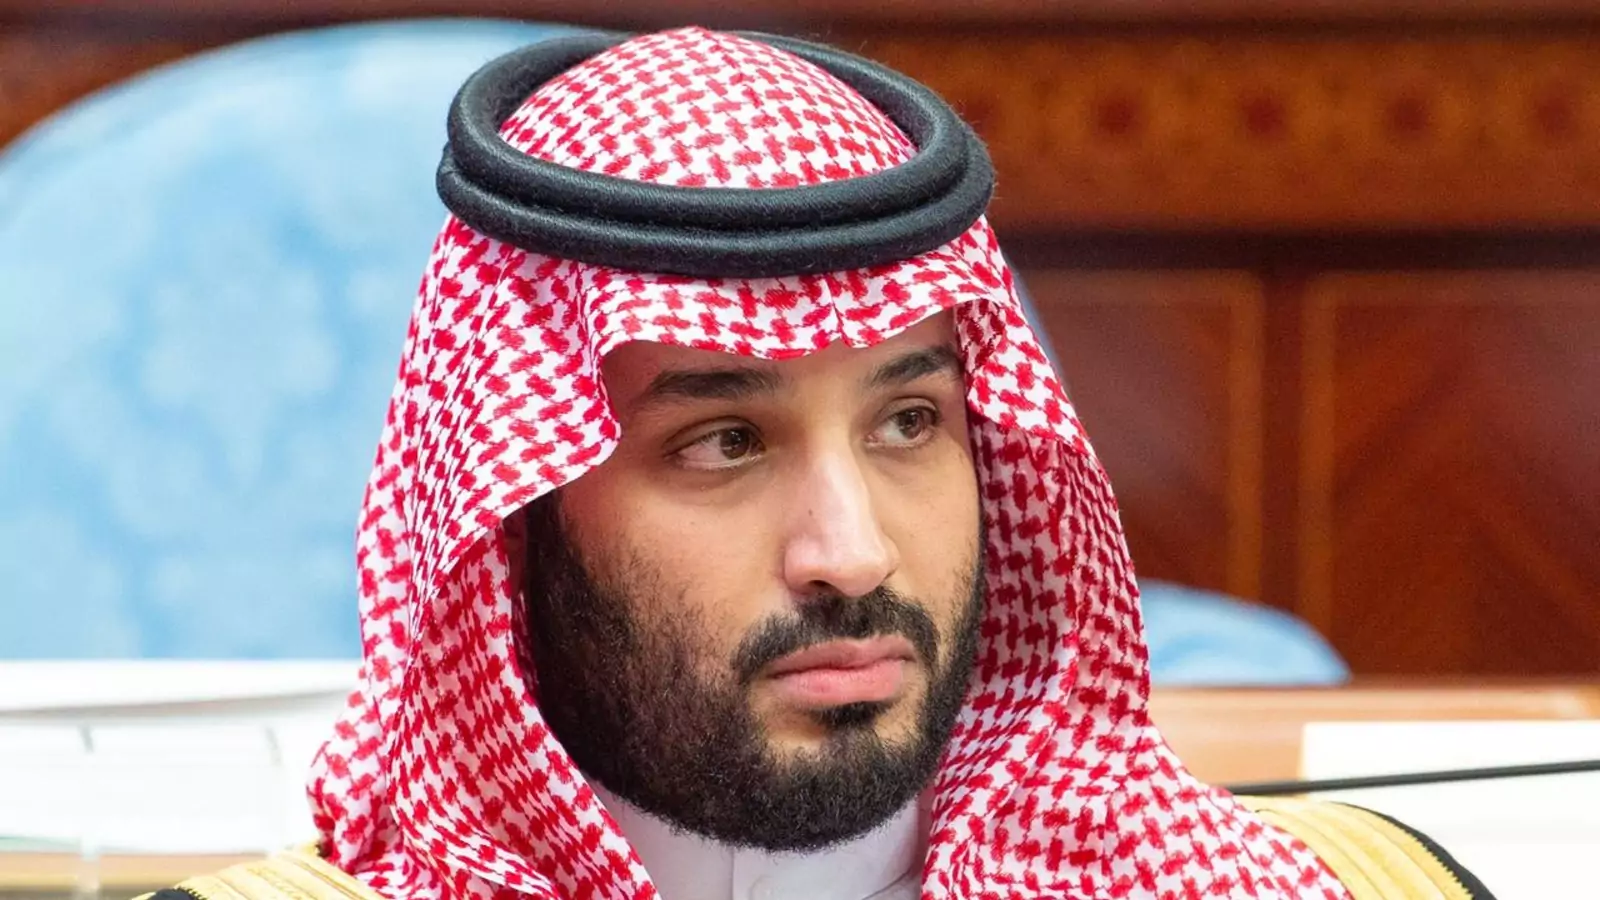 Saudi Crown Prince Mohammed bin Salman attends a session of the Shura Council in Riyadh, Saudi Arabia November 20, 2019.